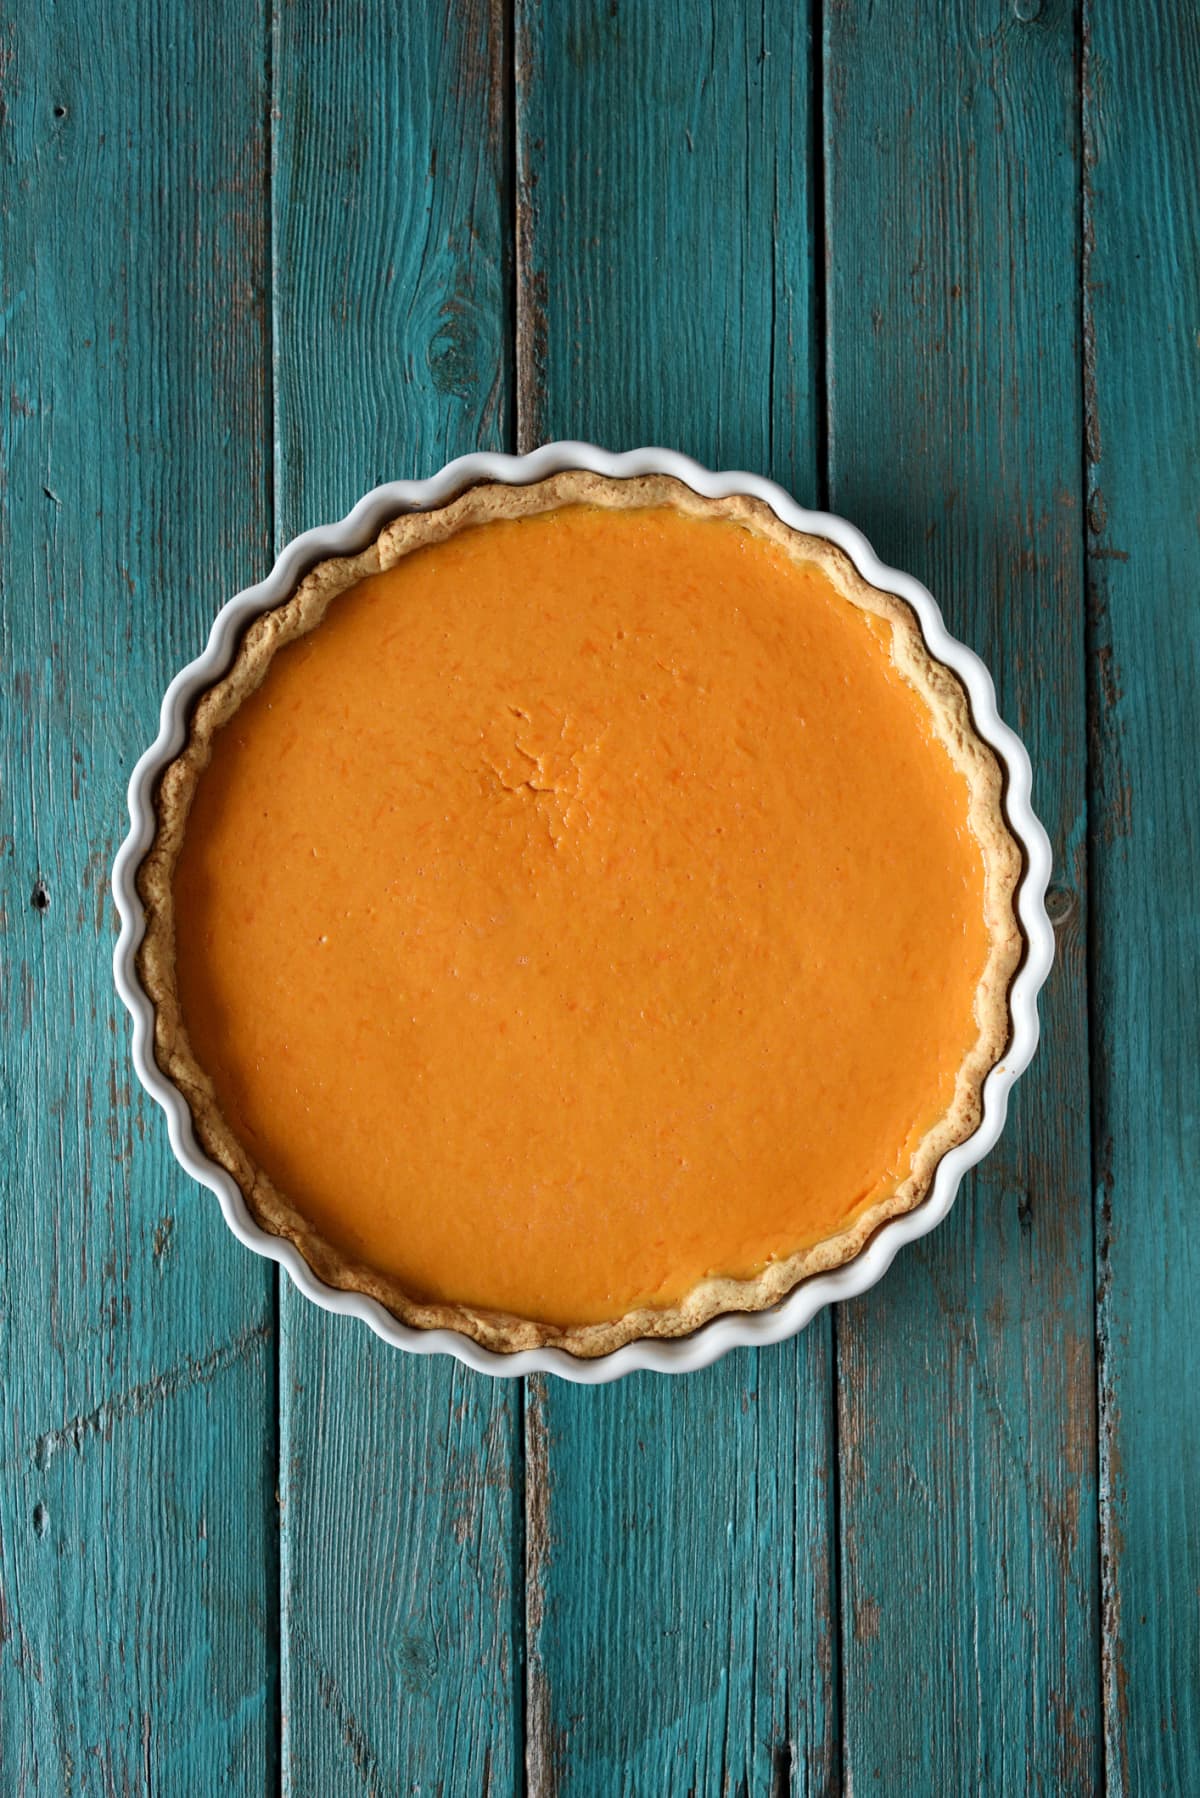 Pumpkin pie in a baking dish on blue wooden surface